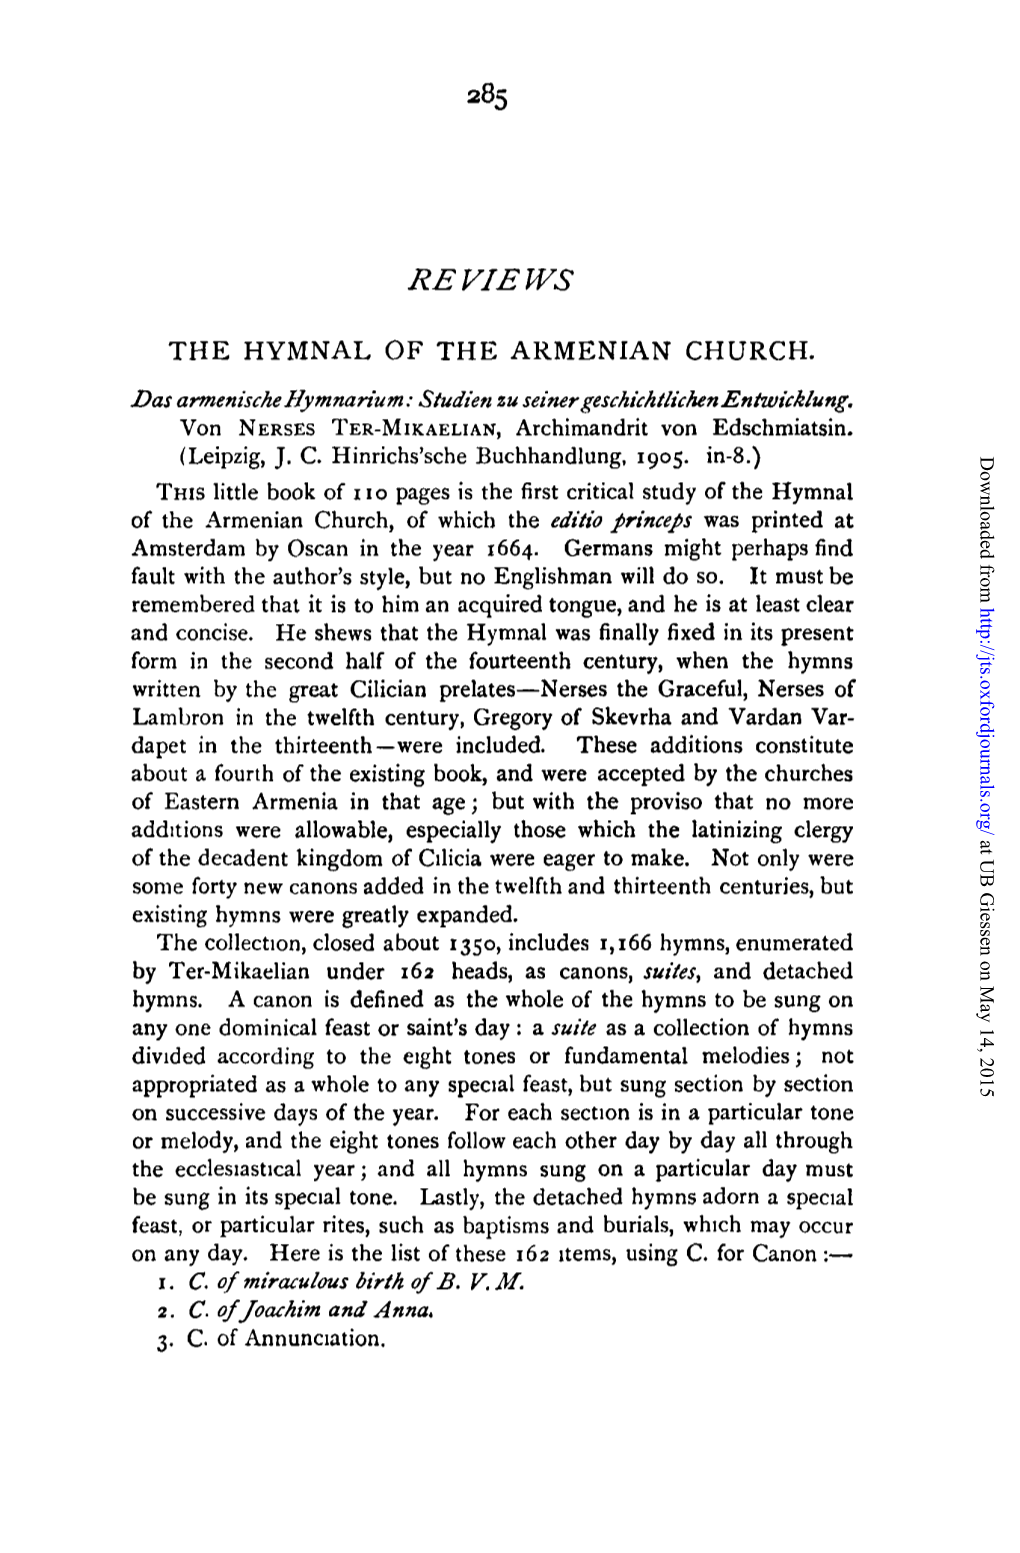 Reviews the Hymnal of the Armenian Church